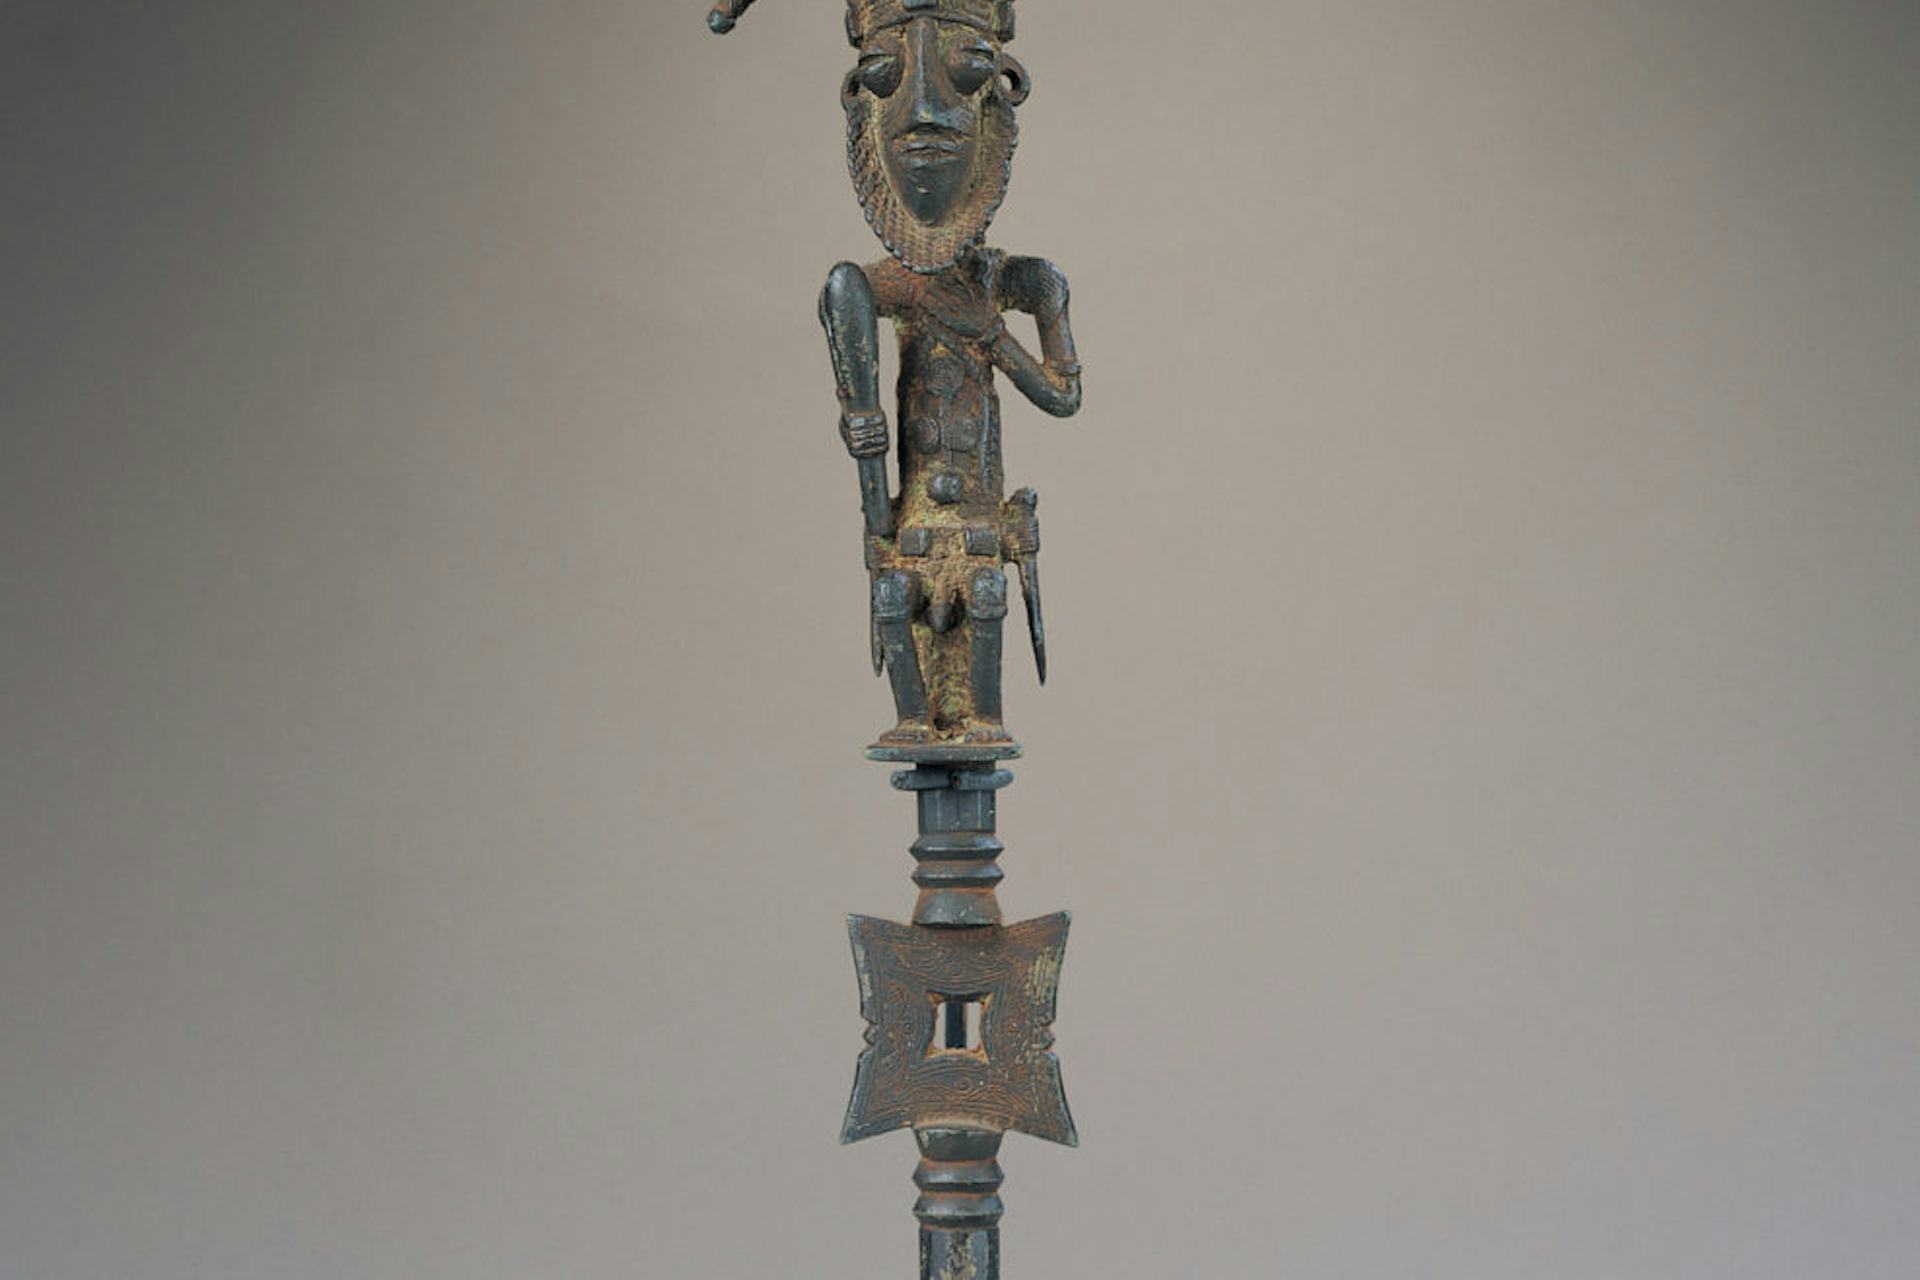 Blacksmith’s Staff (Opa Ogun) by Yoruba artist, (20th century).